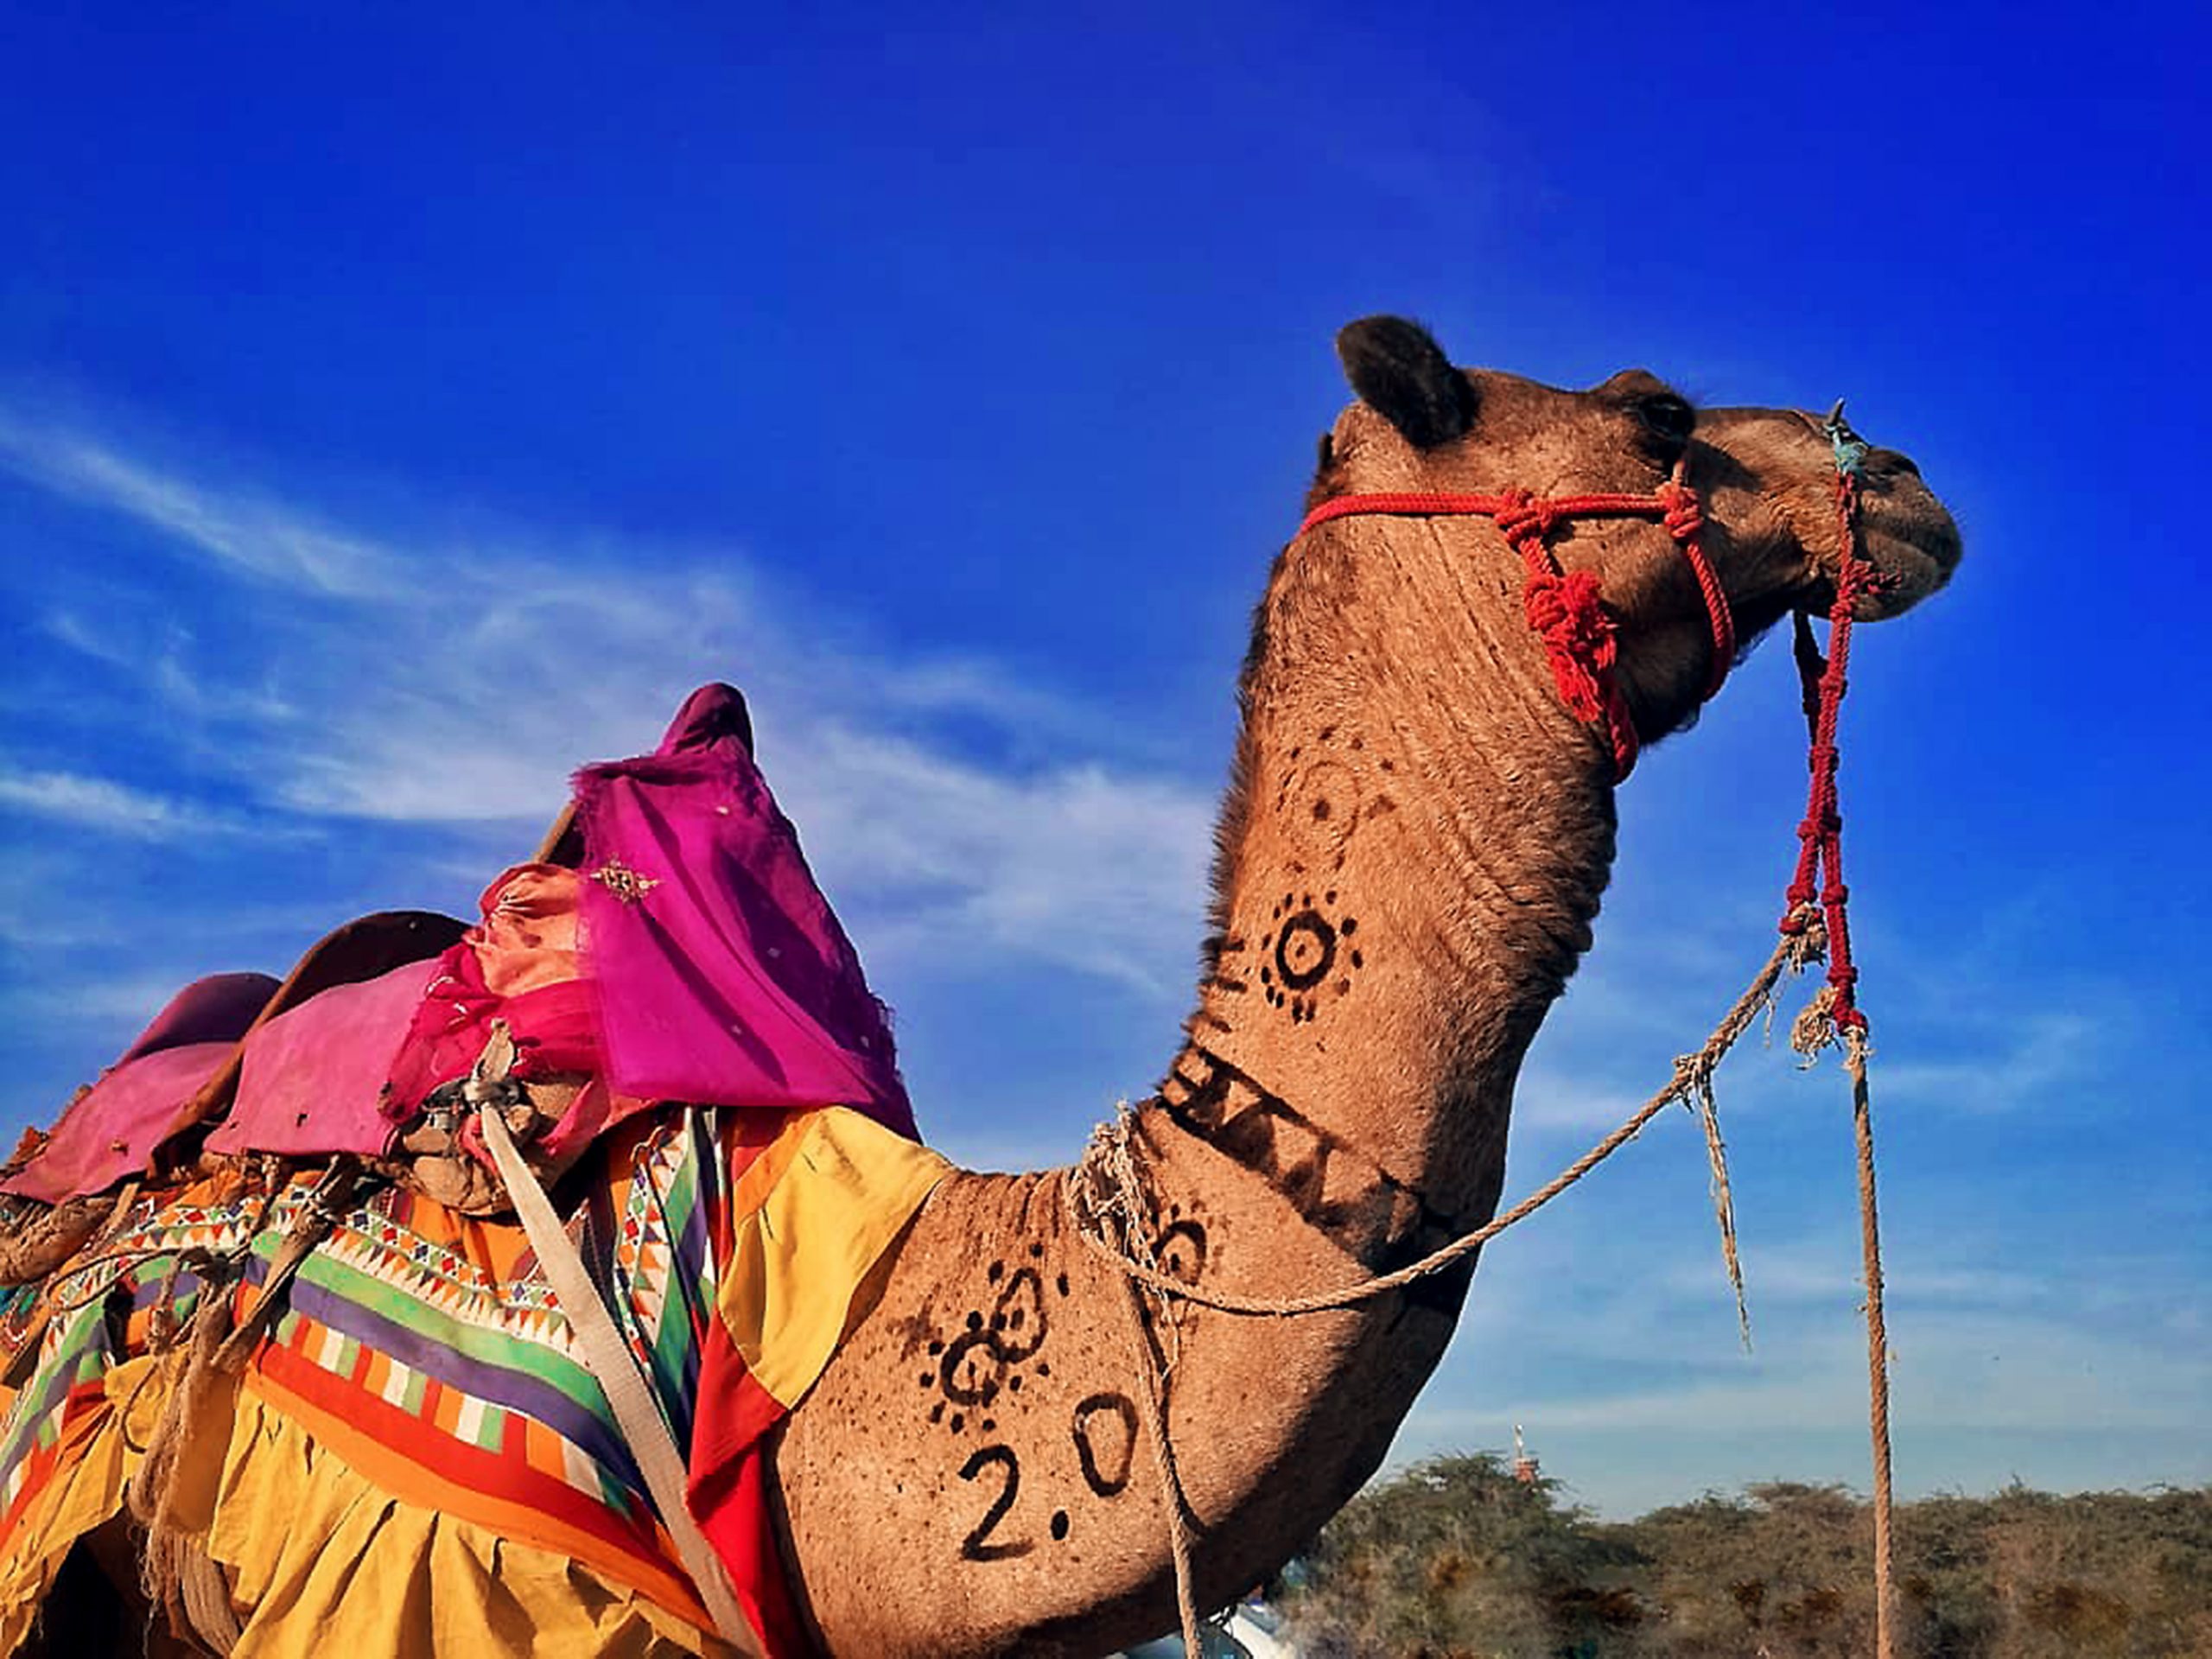 A desert safari camel